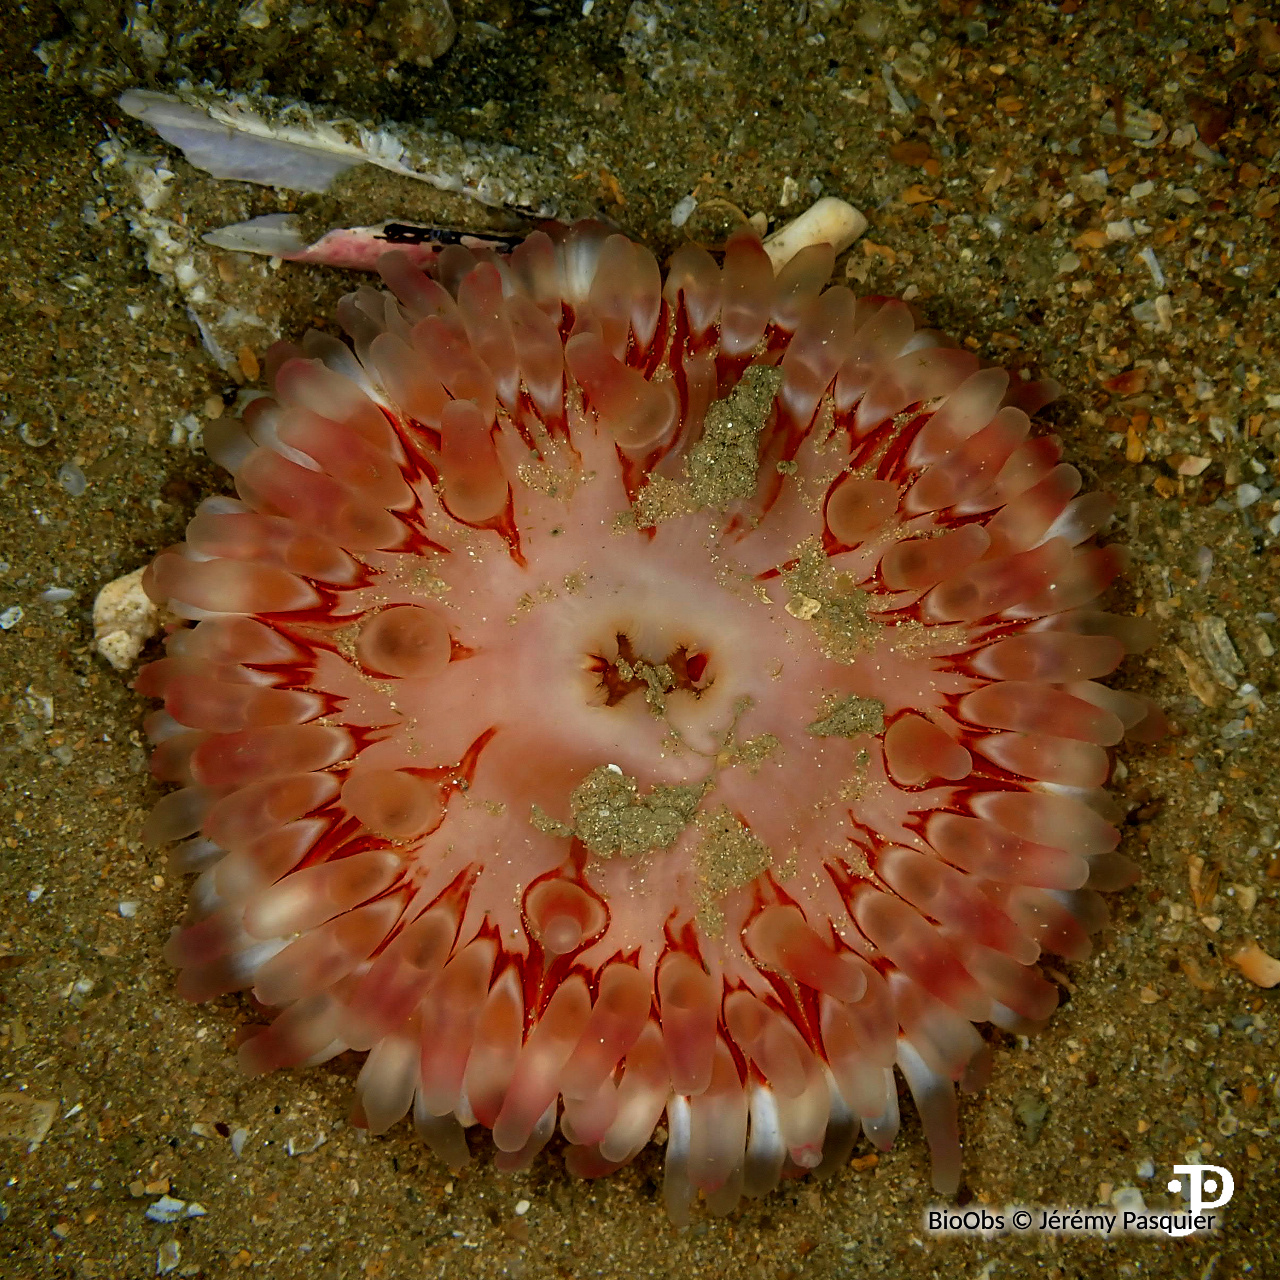 Dahlia de mer - Urticina felina - Jérémy Pasquier - BioObs